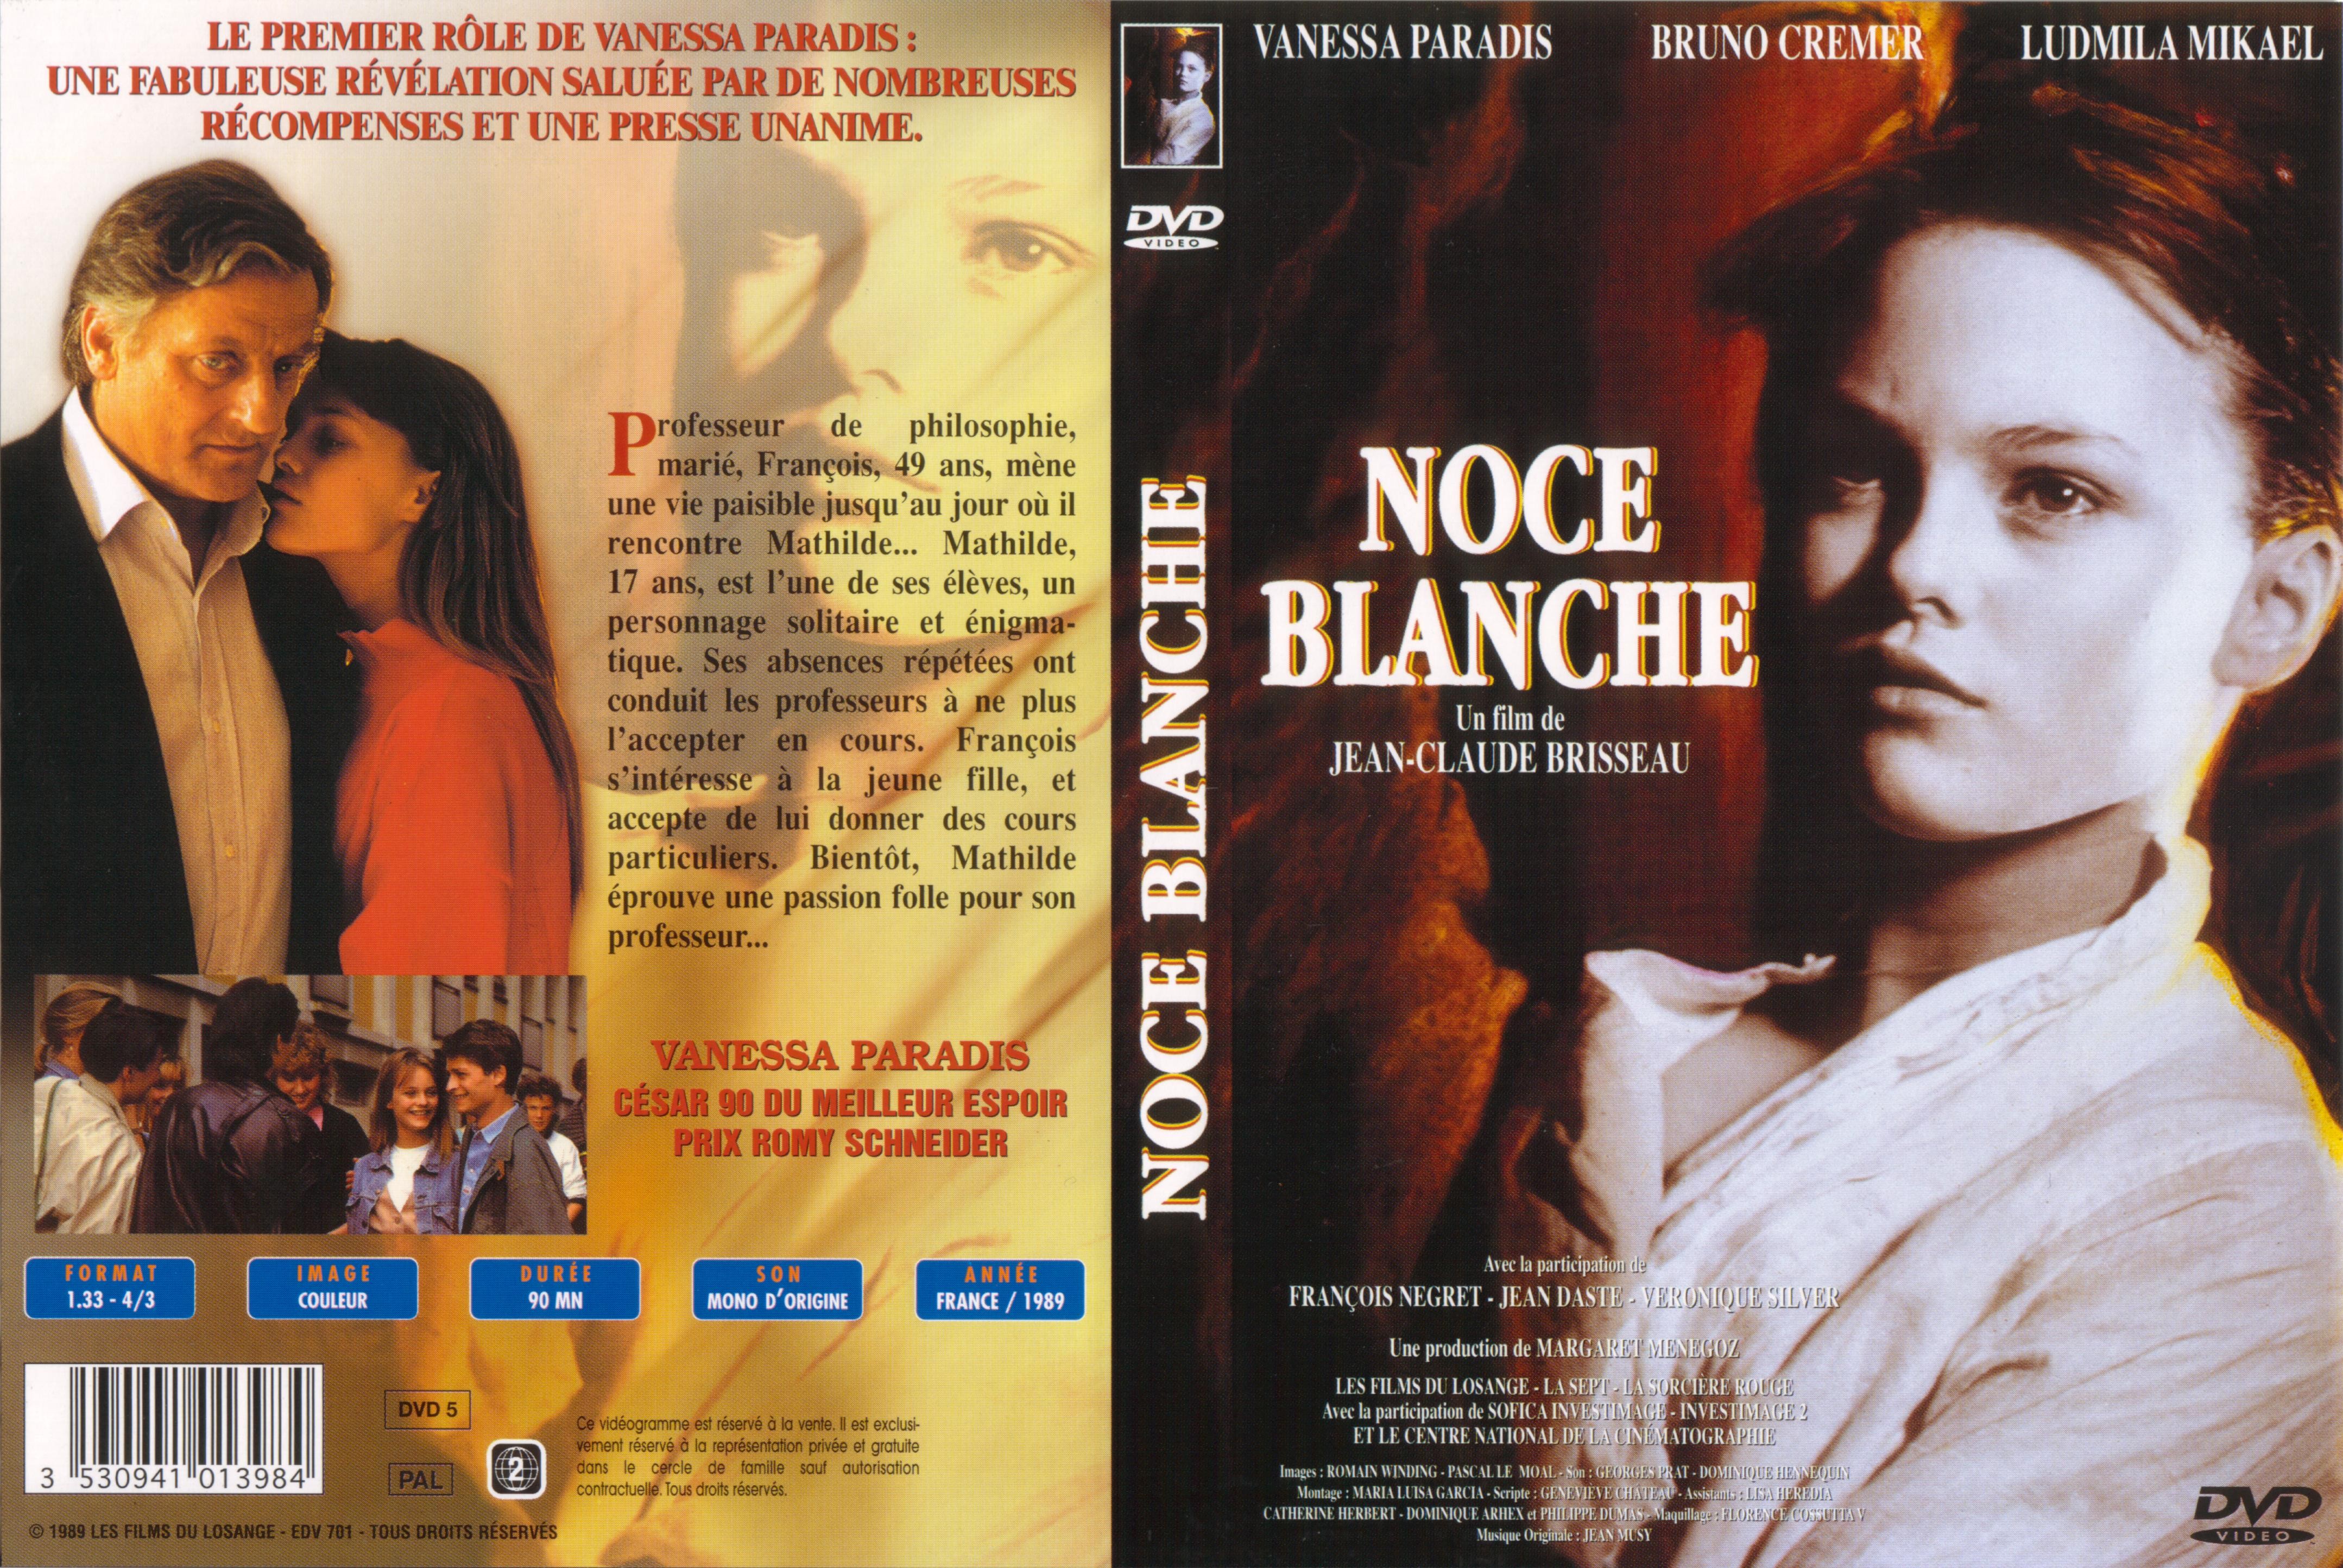 Jaquette DVD Noce blanche